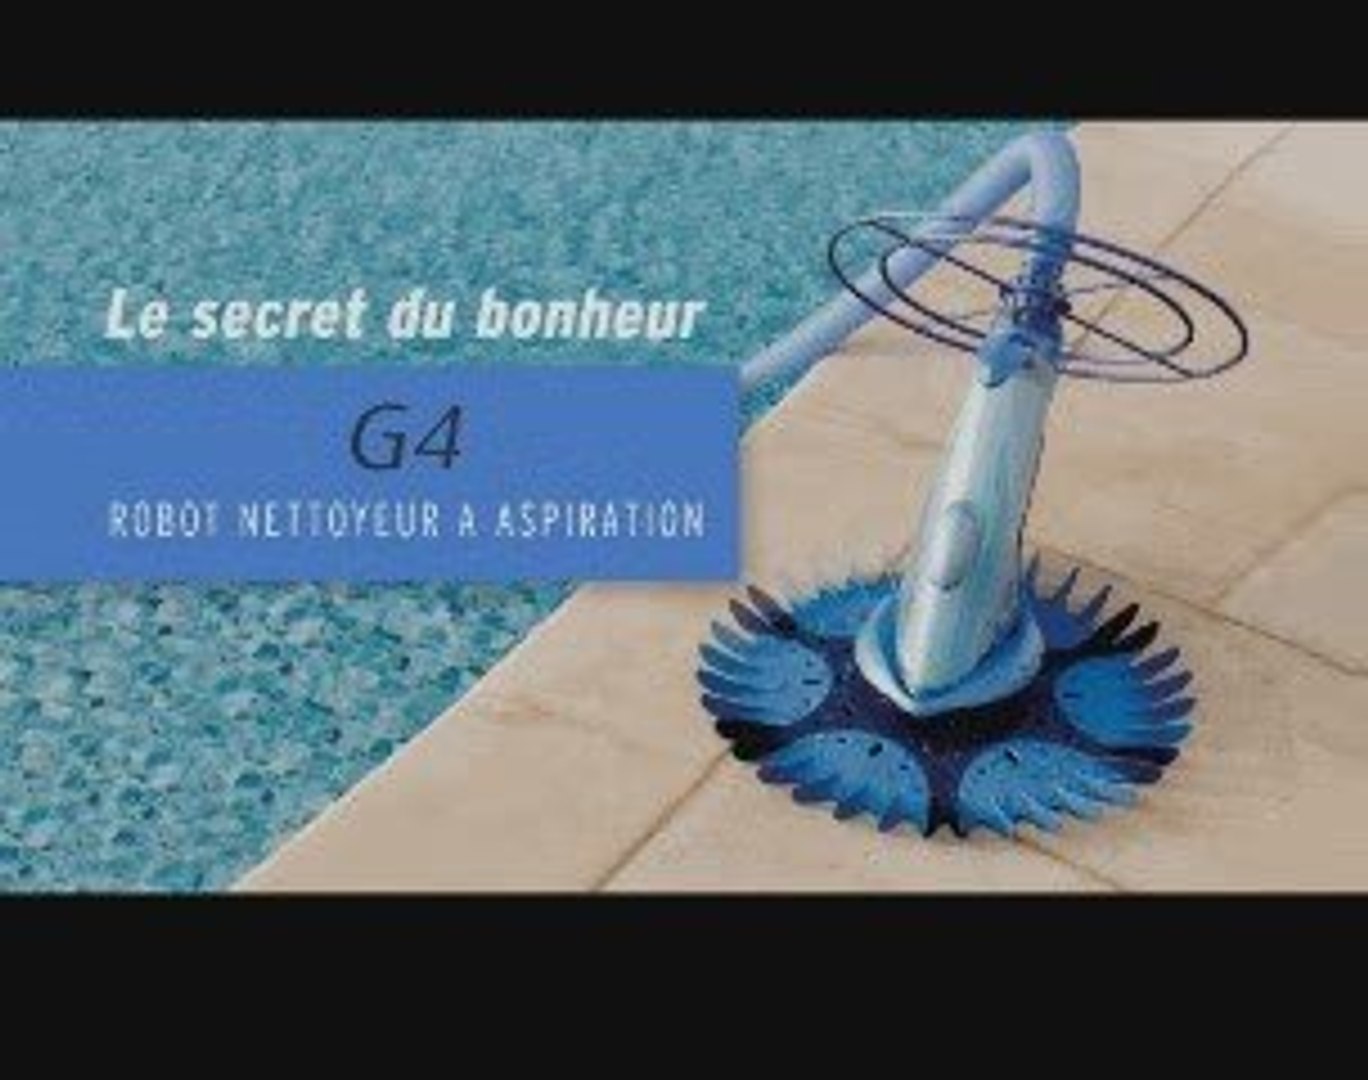 Robot nettoyeur piscine Baracuda G4 ZODIAC VigiPiscine - Vidéo Dailymotion